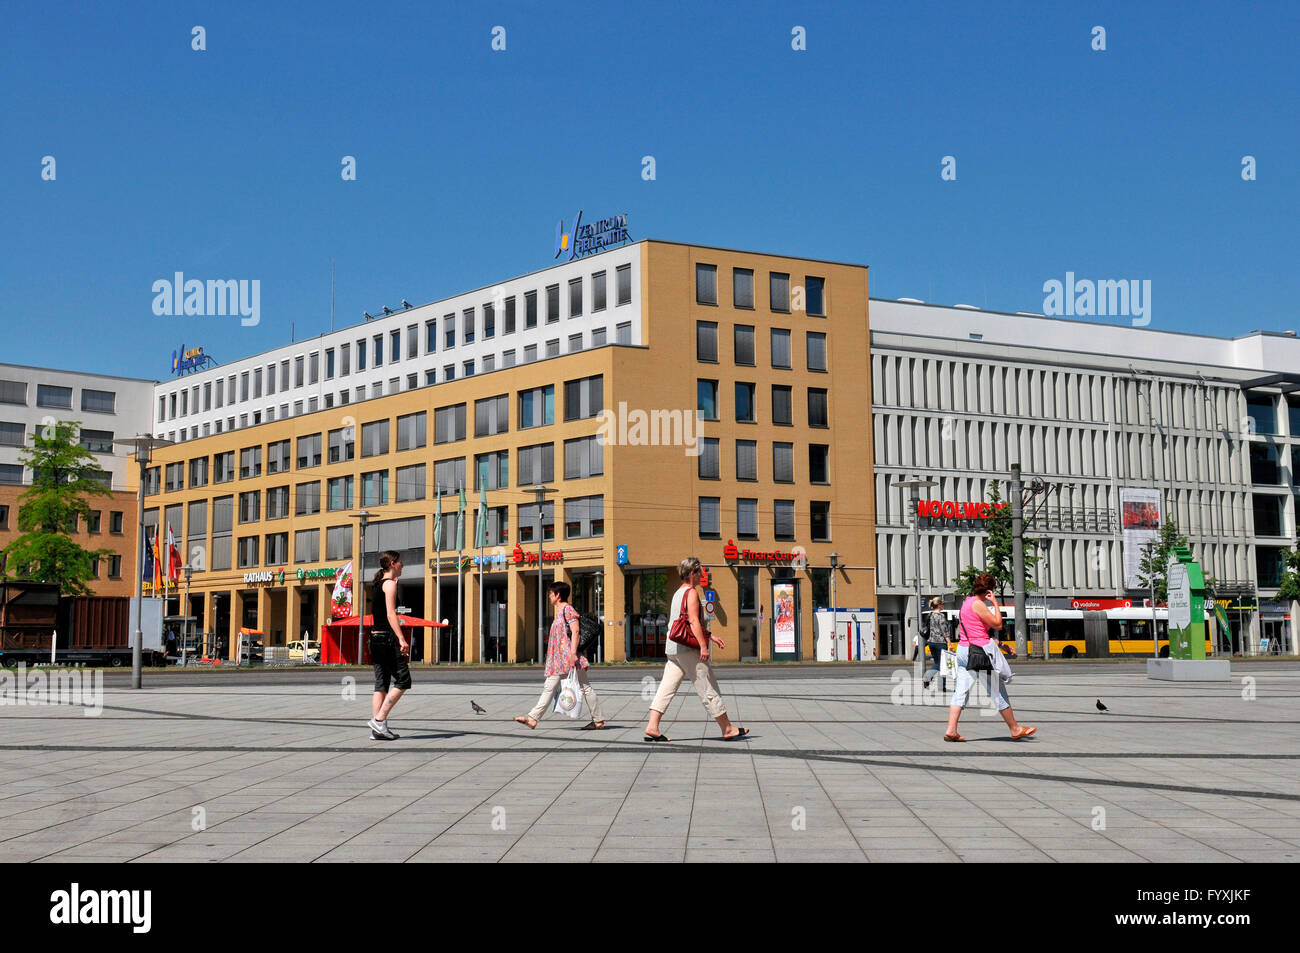 Alice-Salomon-Platz, Hellersdorf, Berlin, Deutschland / Alice-Salomon-Platz  Stockfotografie - Alamy